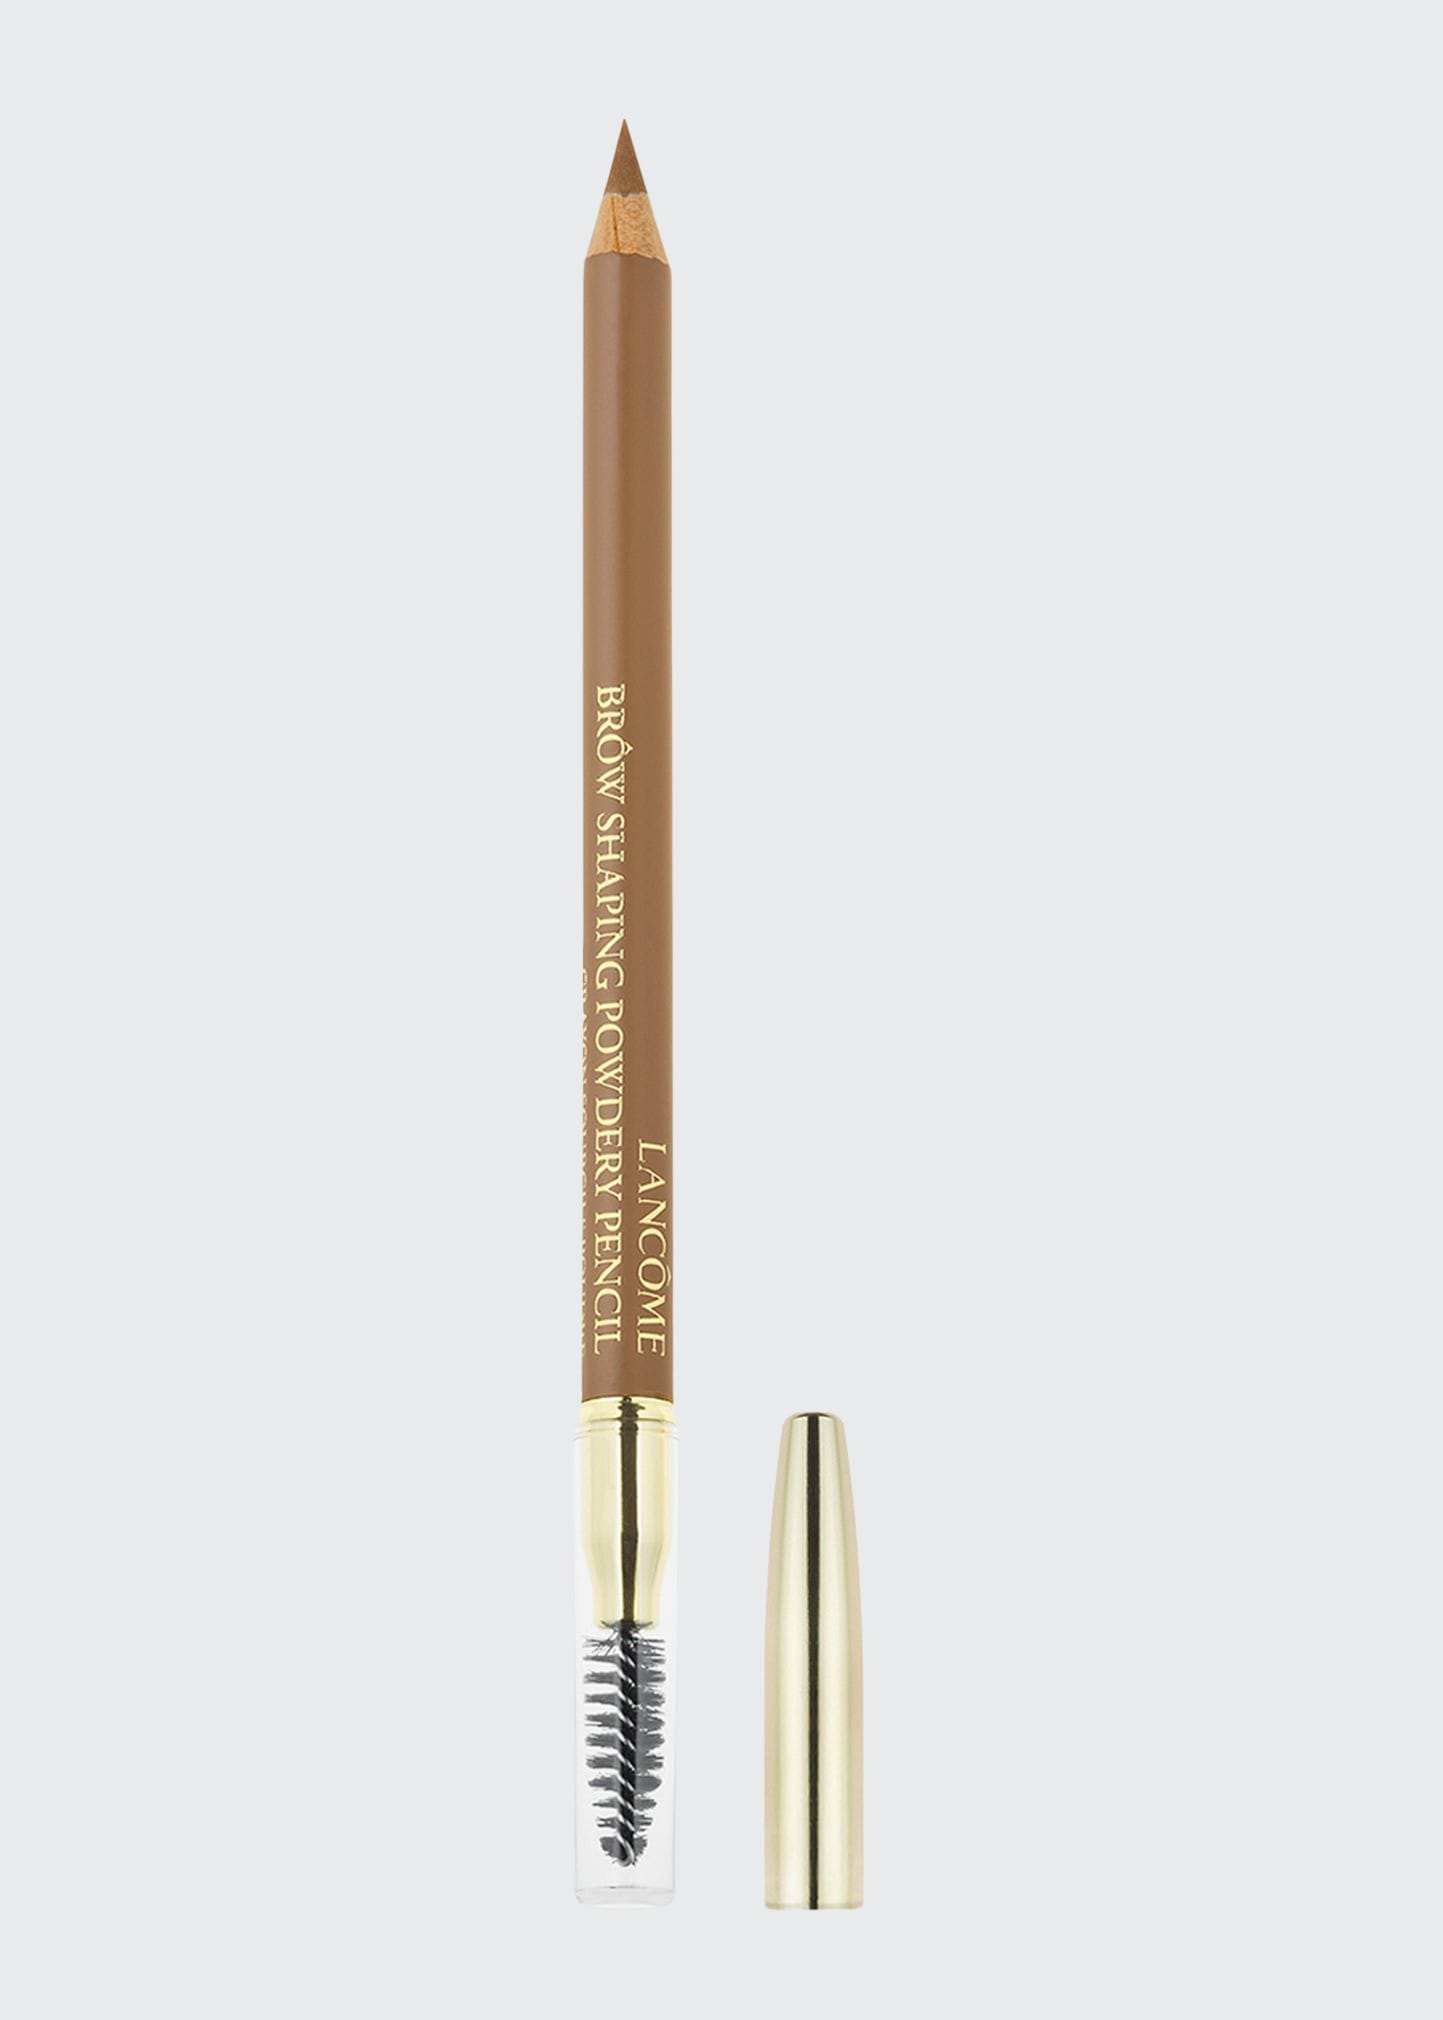 Lancôme Brow Shaping Powdery Pencil In Light Brown 03